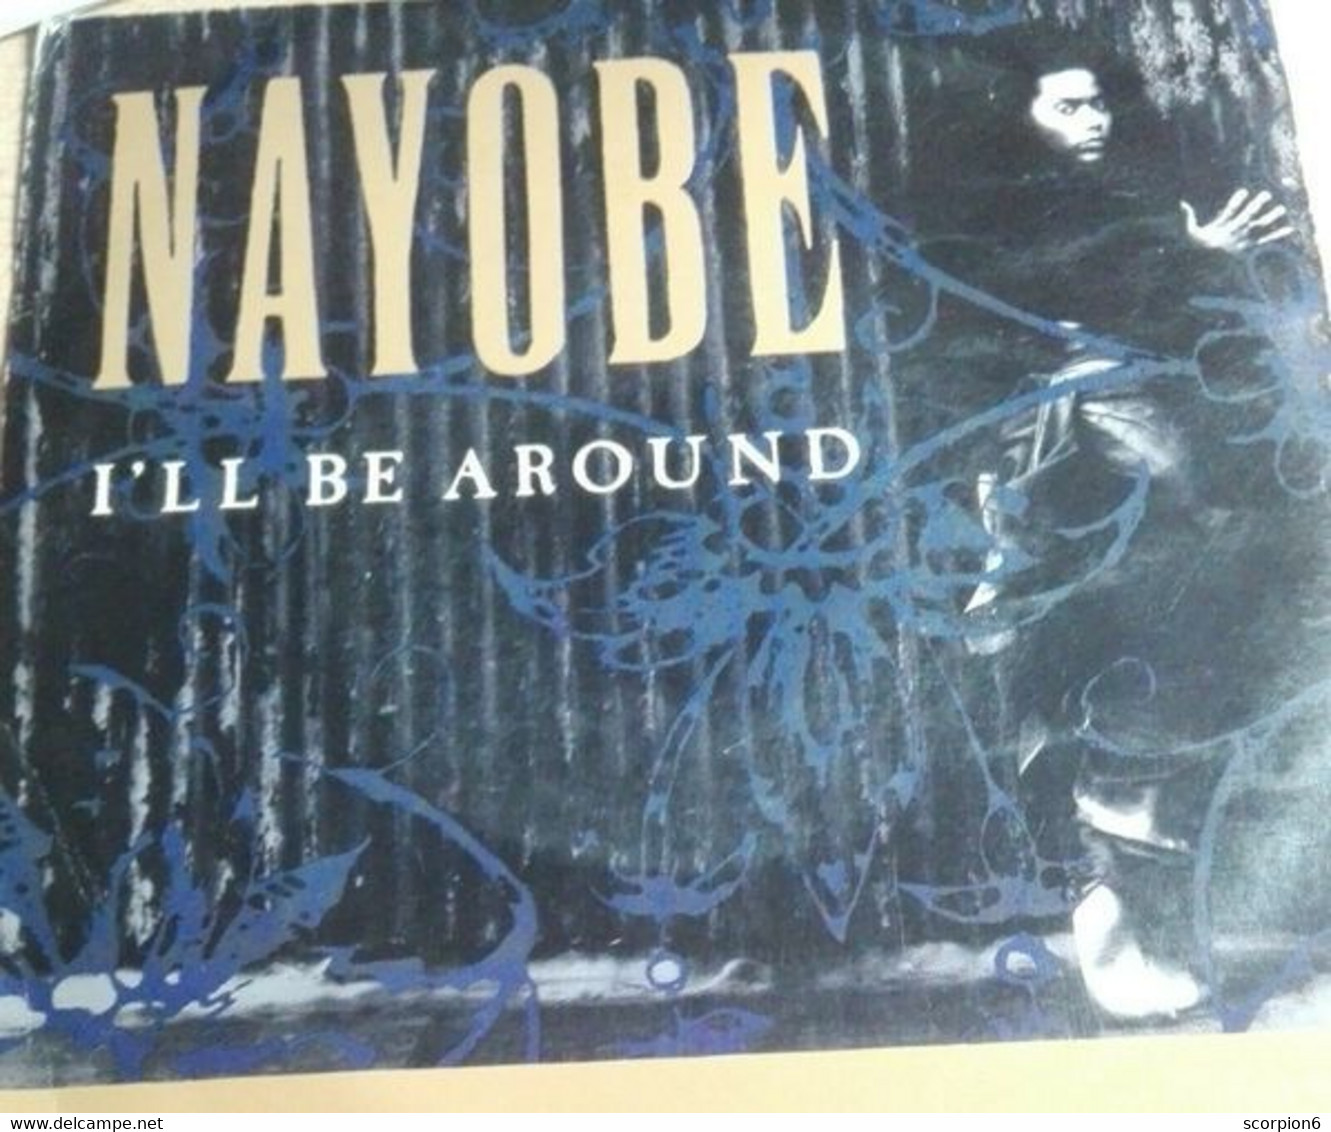 7" Single - Nayobe - I'll Be Around - Dance, Techno & House